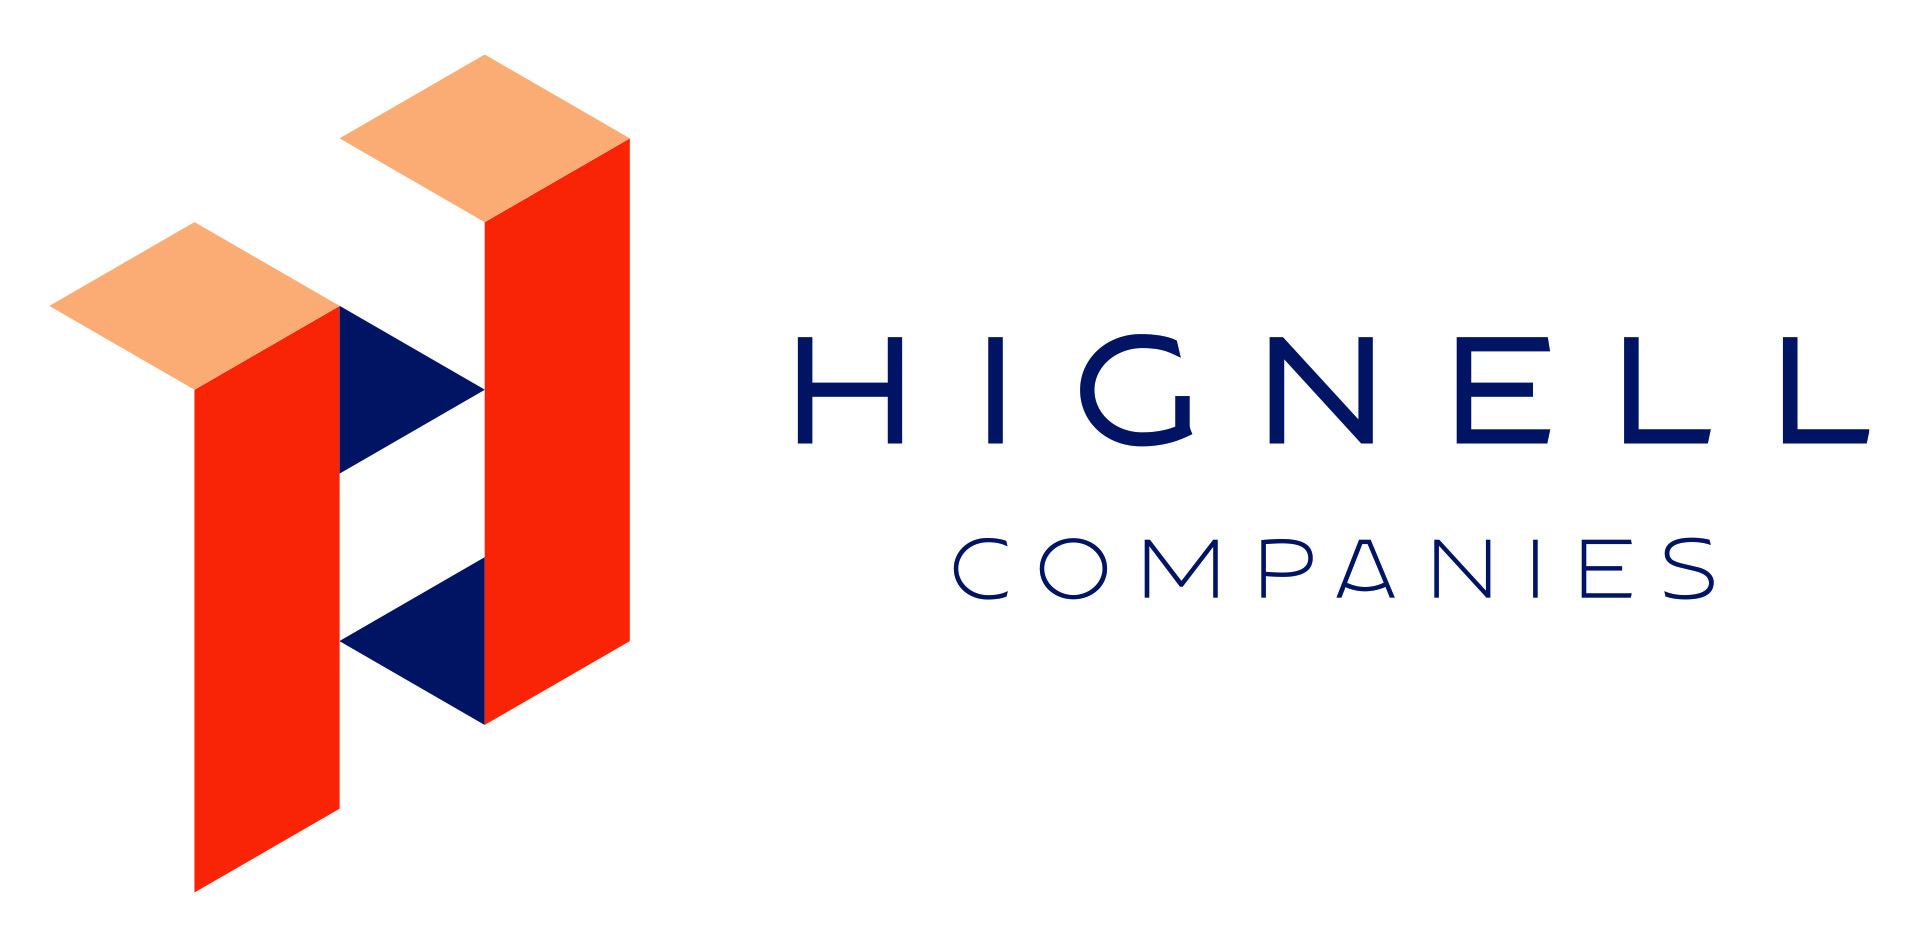 The Hignell Companies reveals new logo.